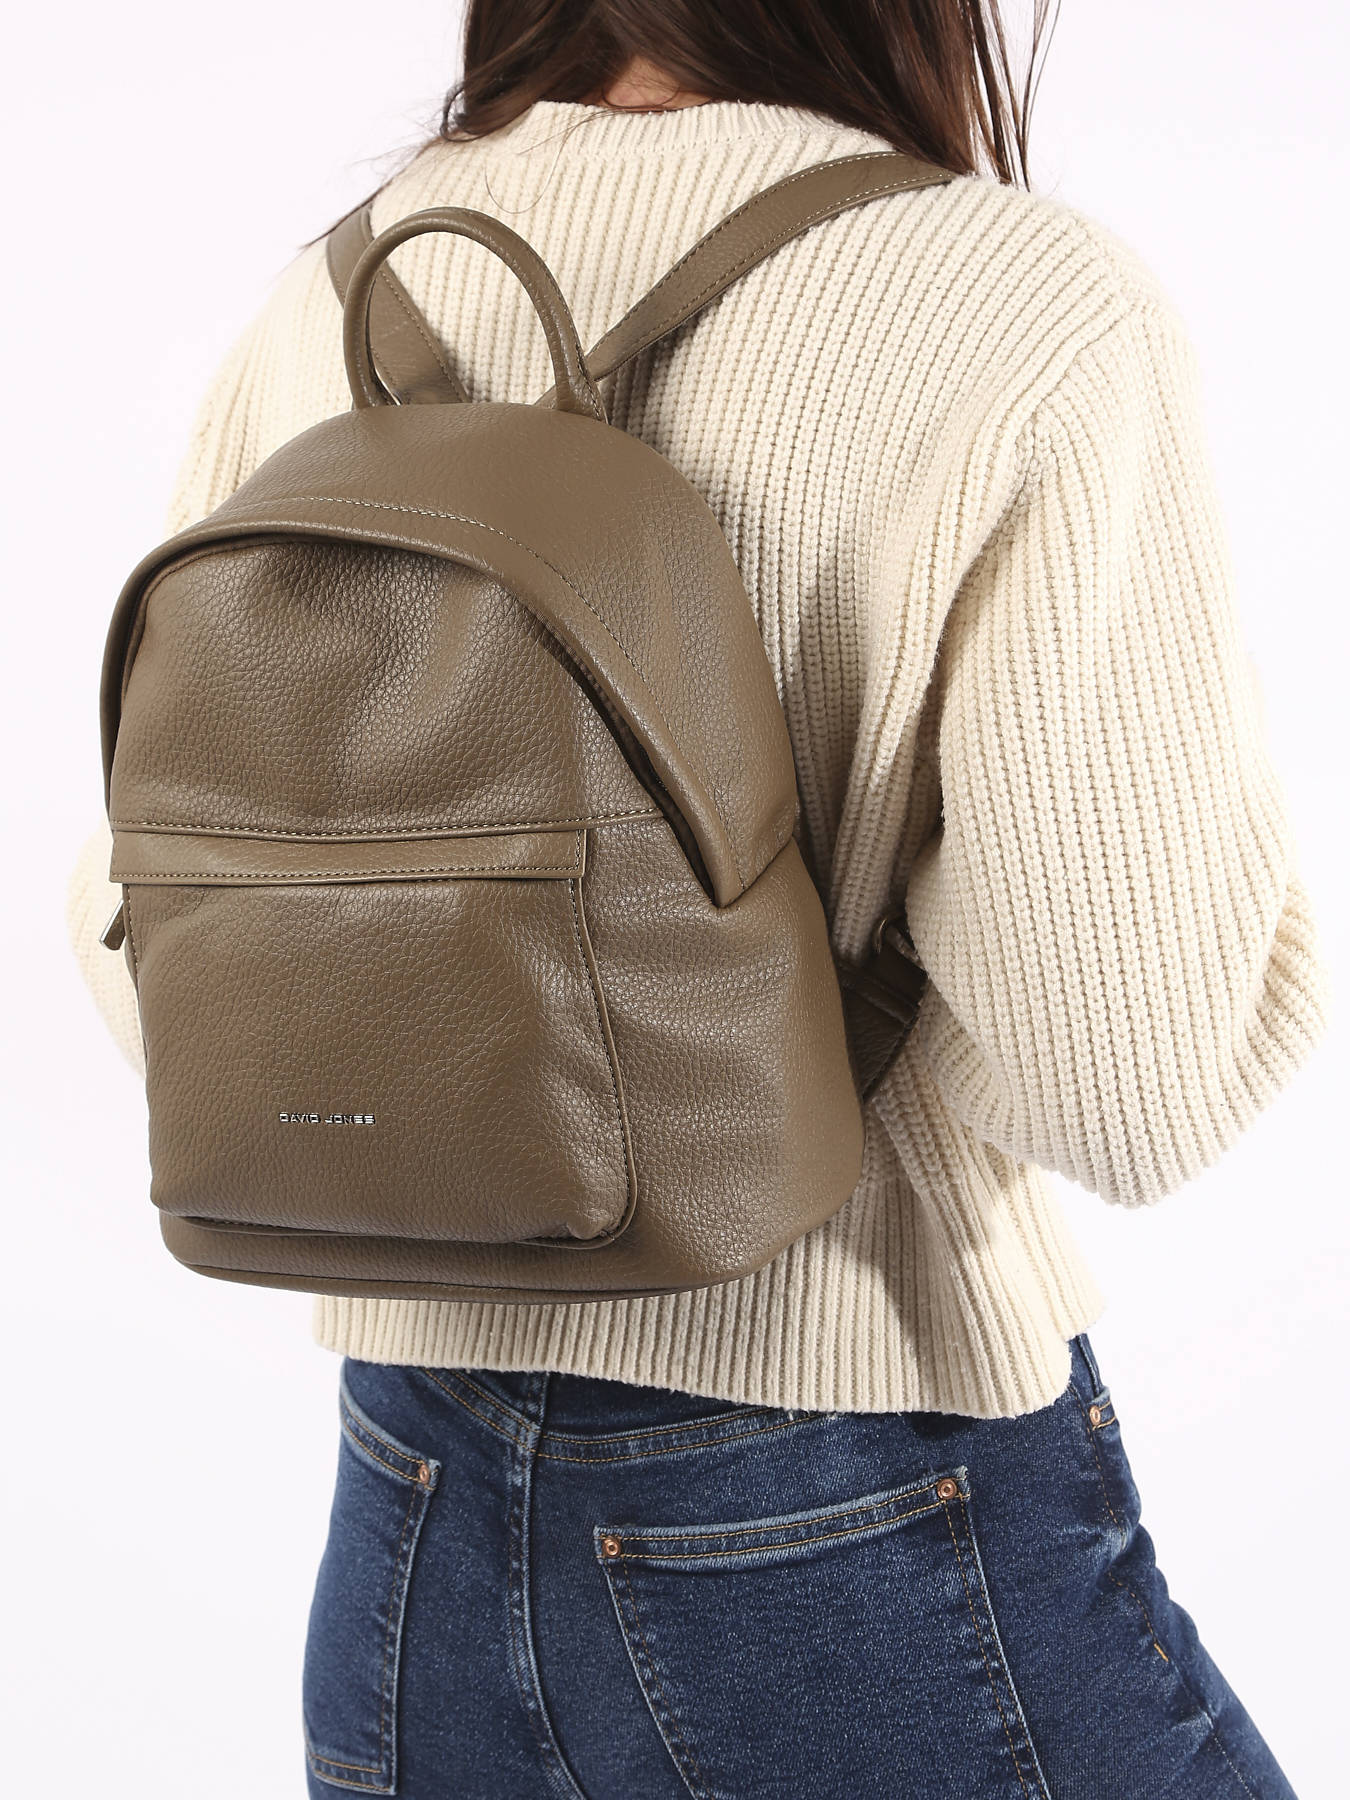 David Jones Leather Backpacks